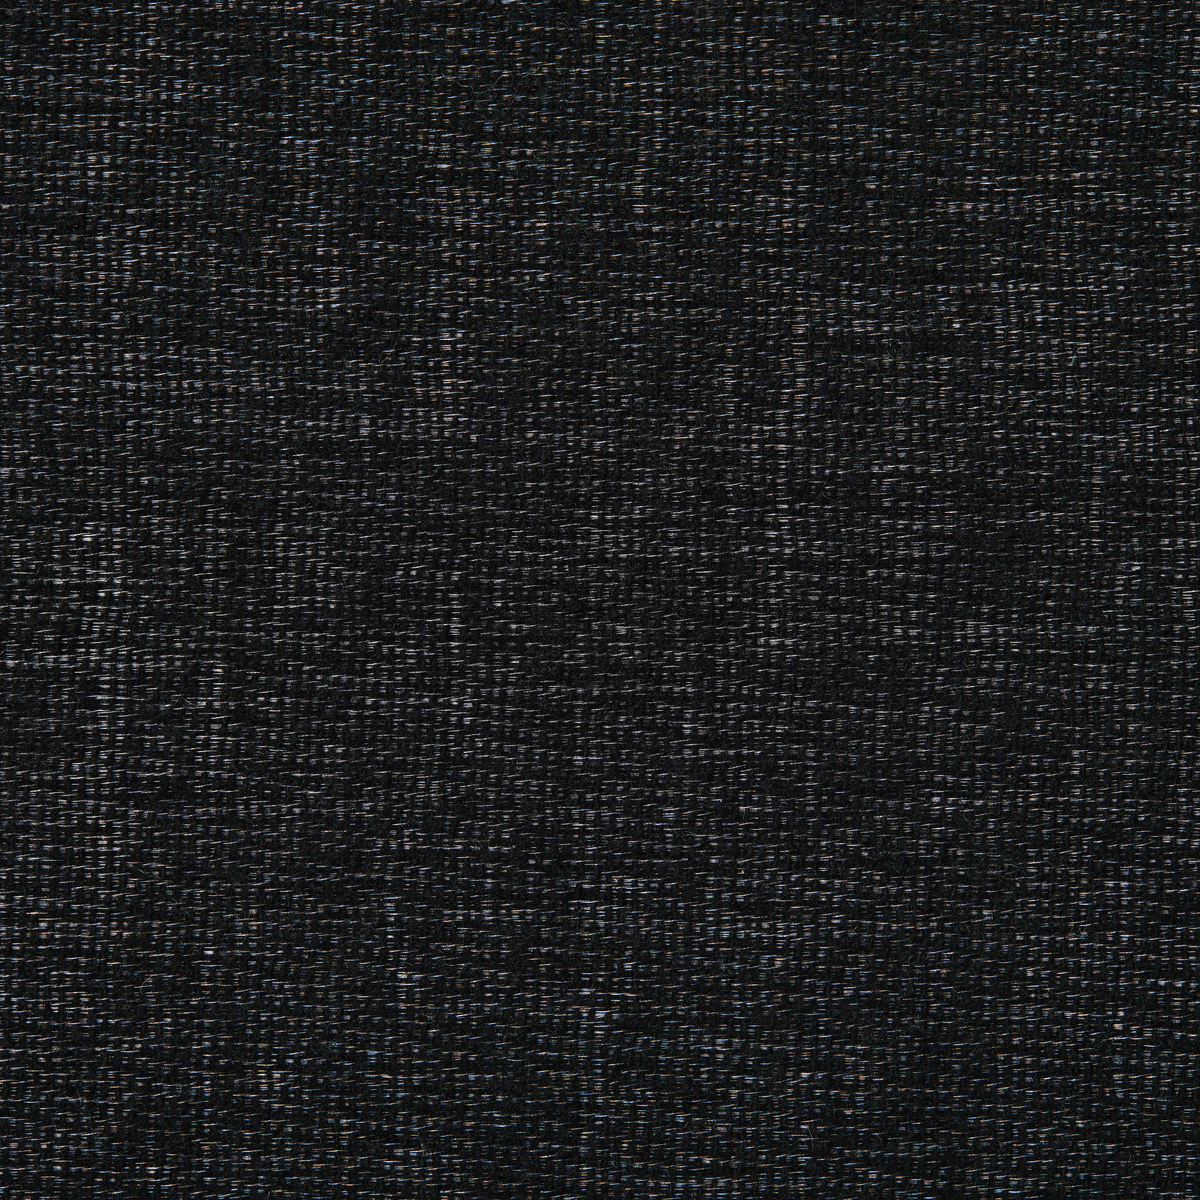 Swatch Sample of Sferra Monterosa Throws in Black Color